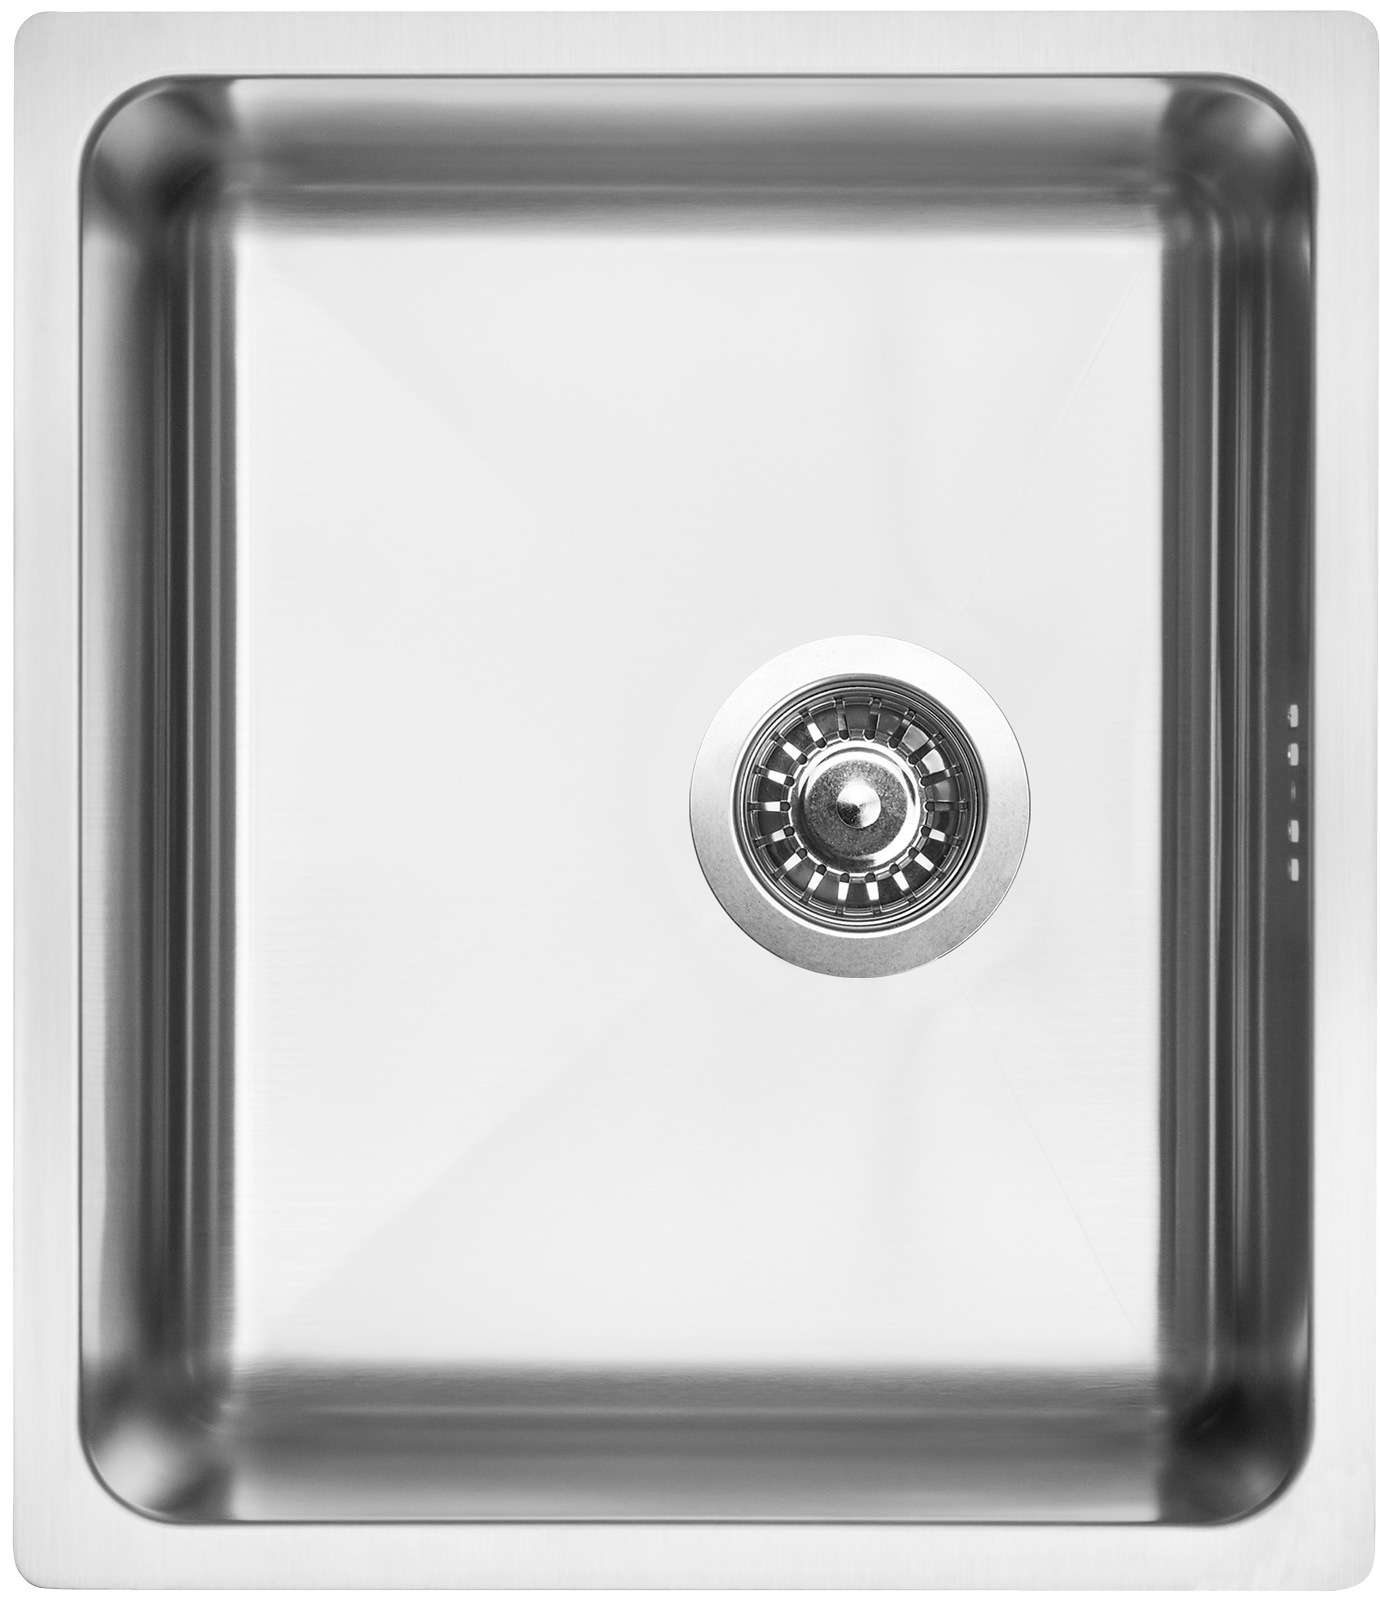 Sinks BLOCK 380 V 1mm kartáčovaný (záruka 5 let)